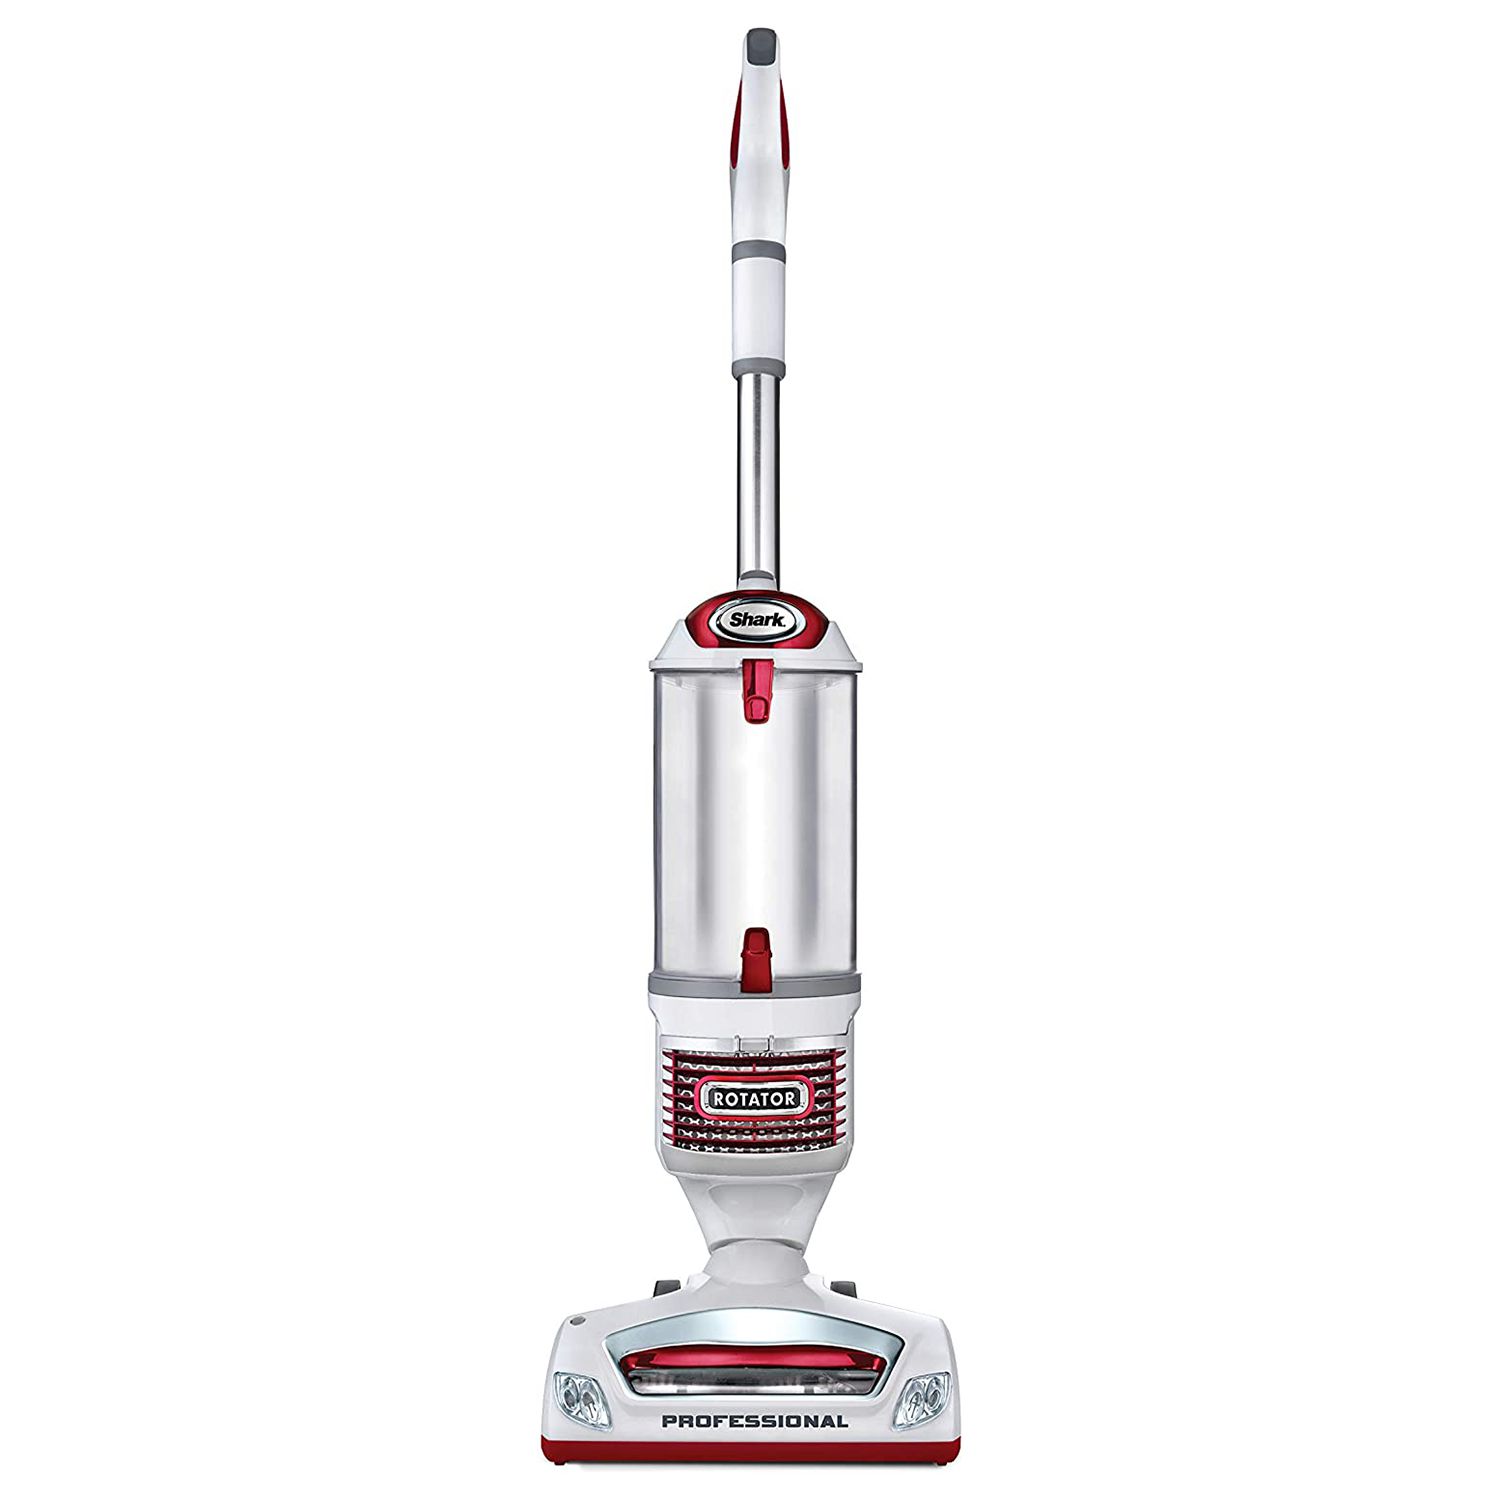 Shark Rotator Professional Upright Bagless Vacuum Cleaner